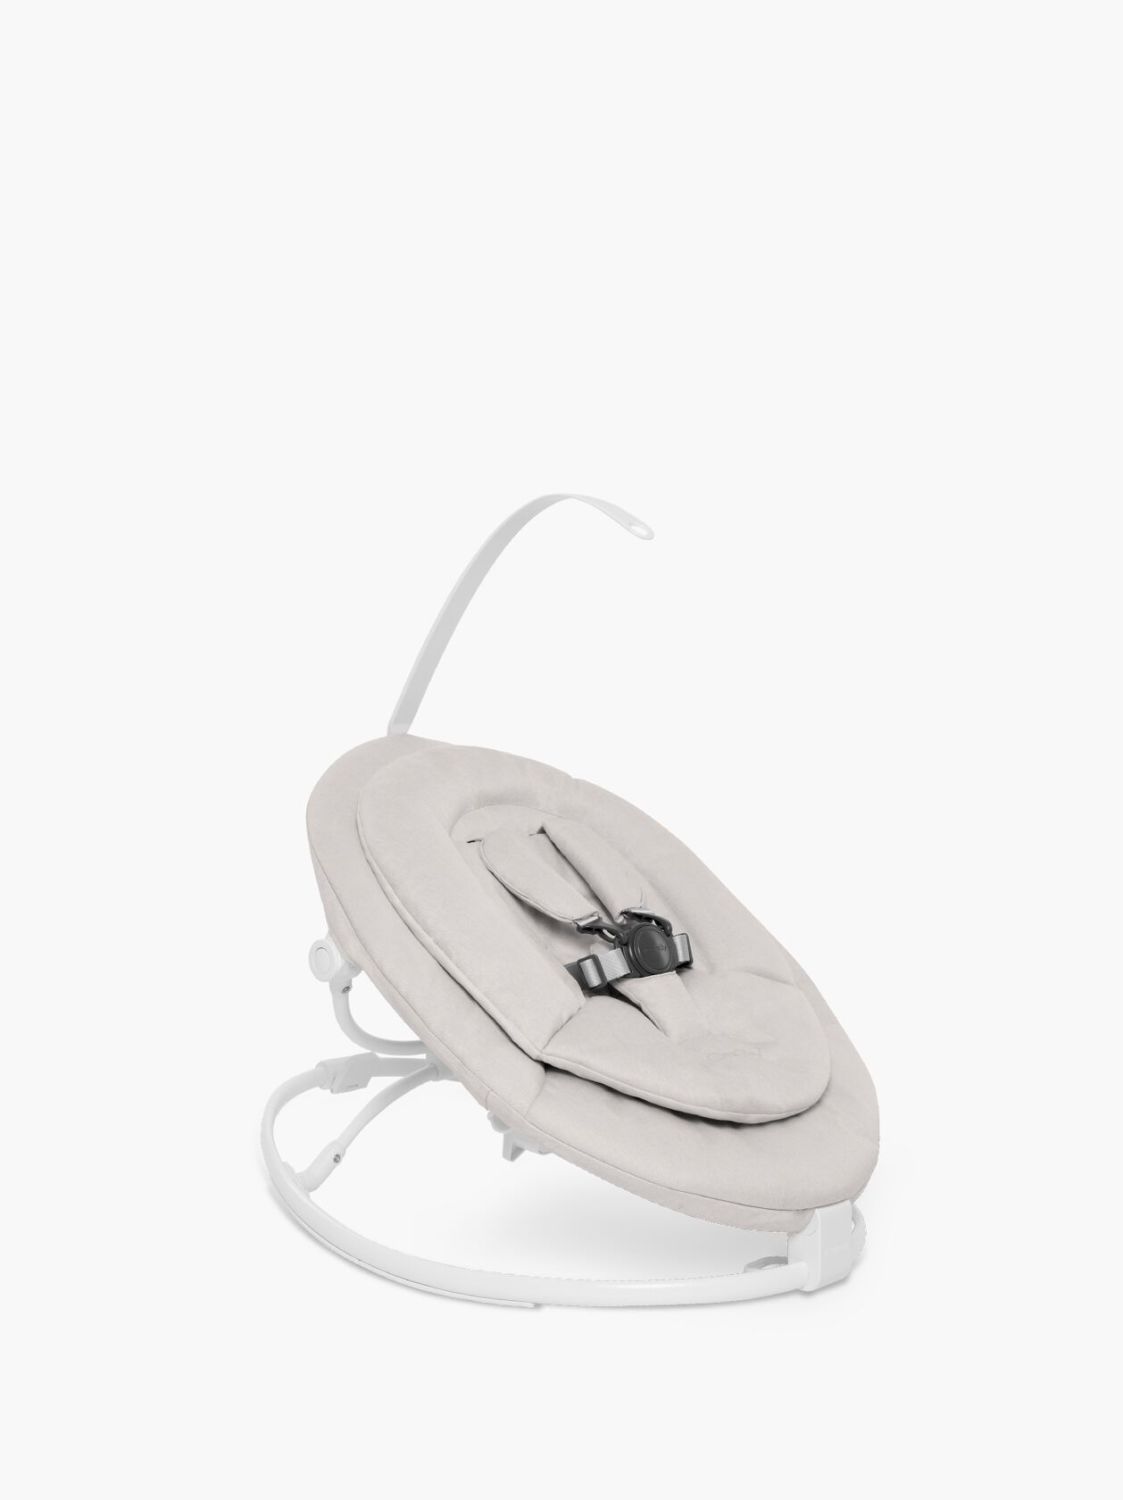 iCandy MiChair Newborn Pod - White/Pearl